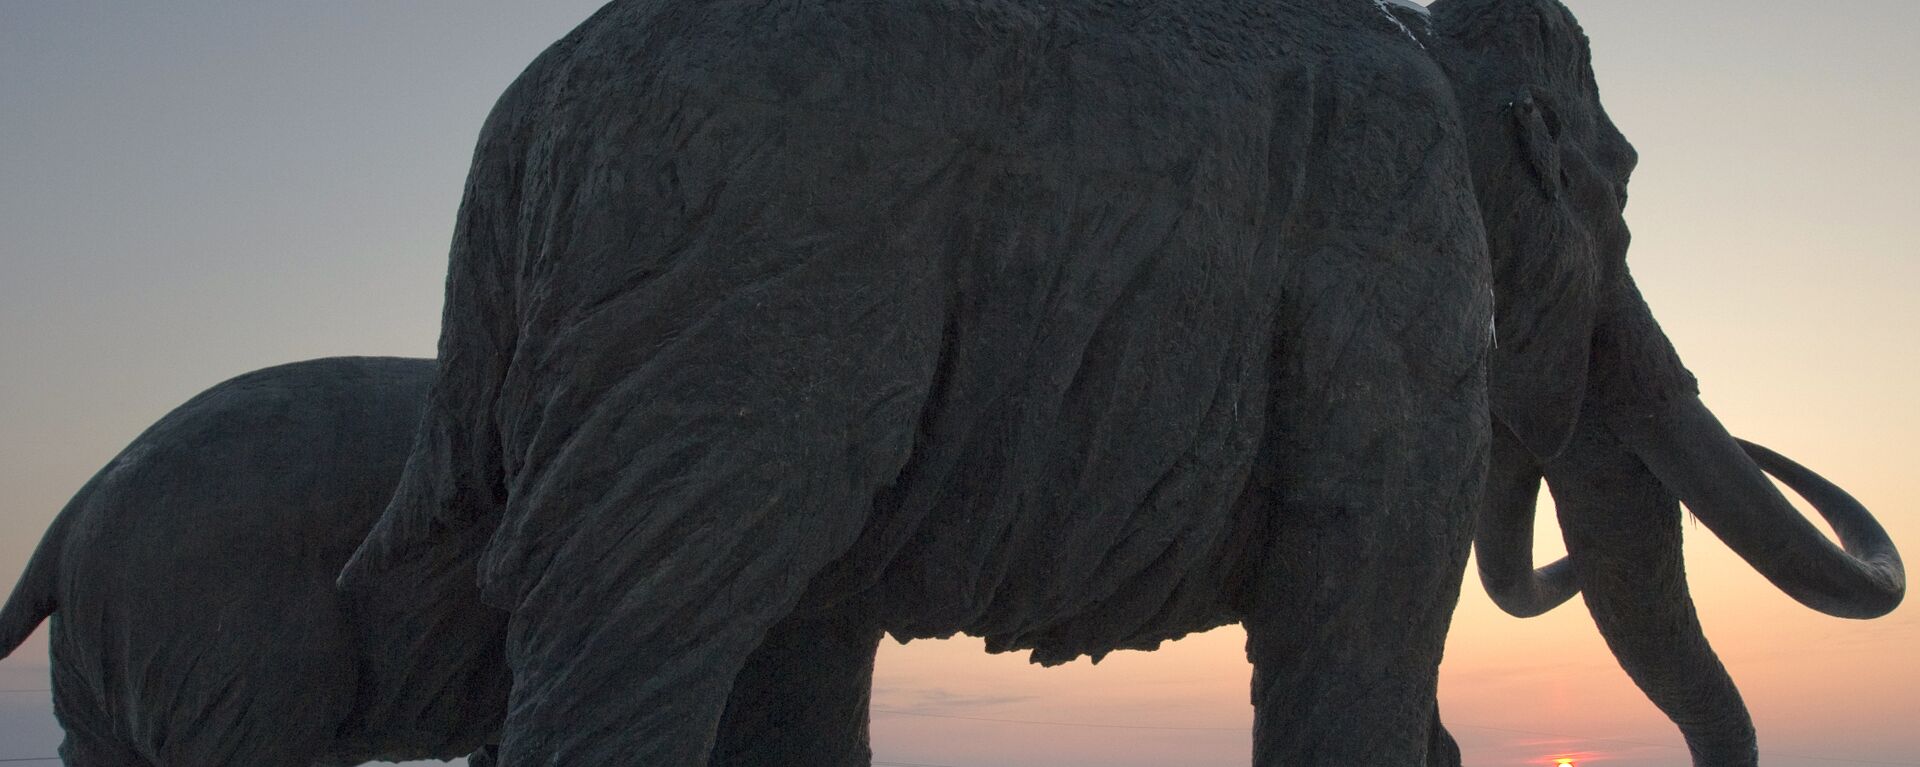 Monumento de mamute na Rússia (imagem referencial) - Sputnik Brasil, 1920, 20.02.2021